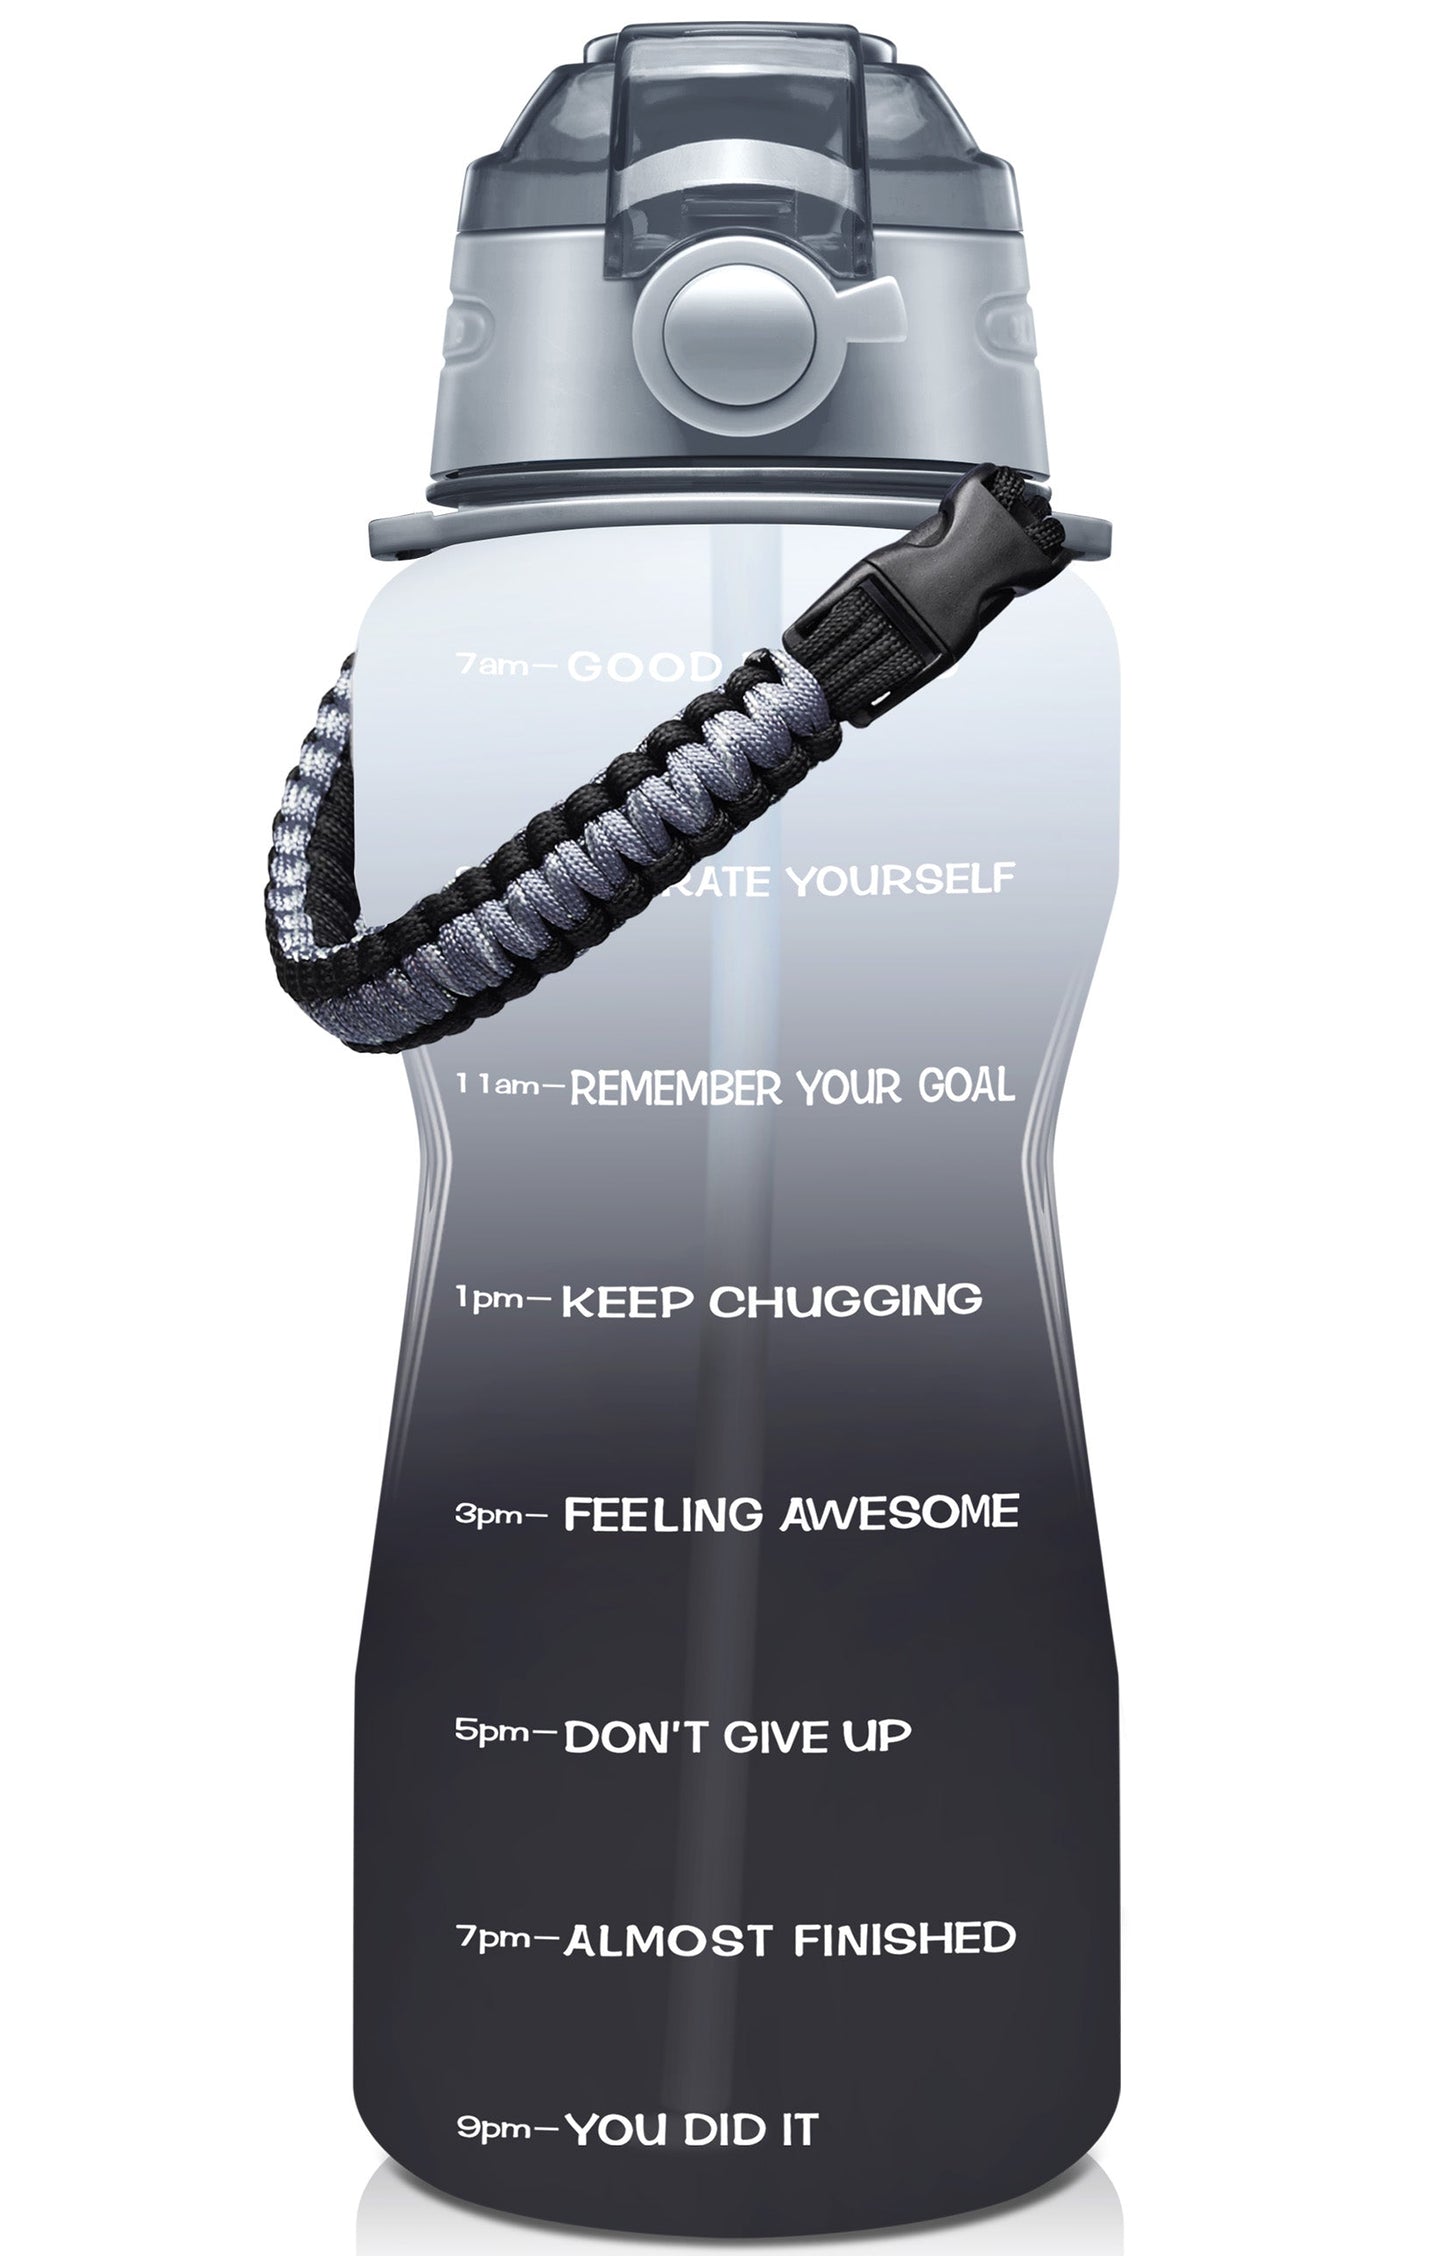 Kylie Jenner's Fidus 64oz Motivational Water Bottle